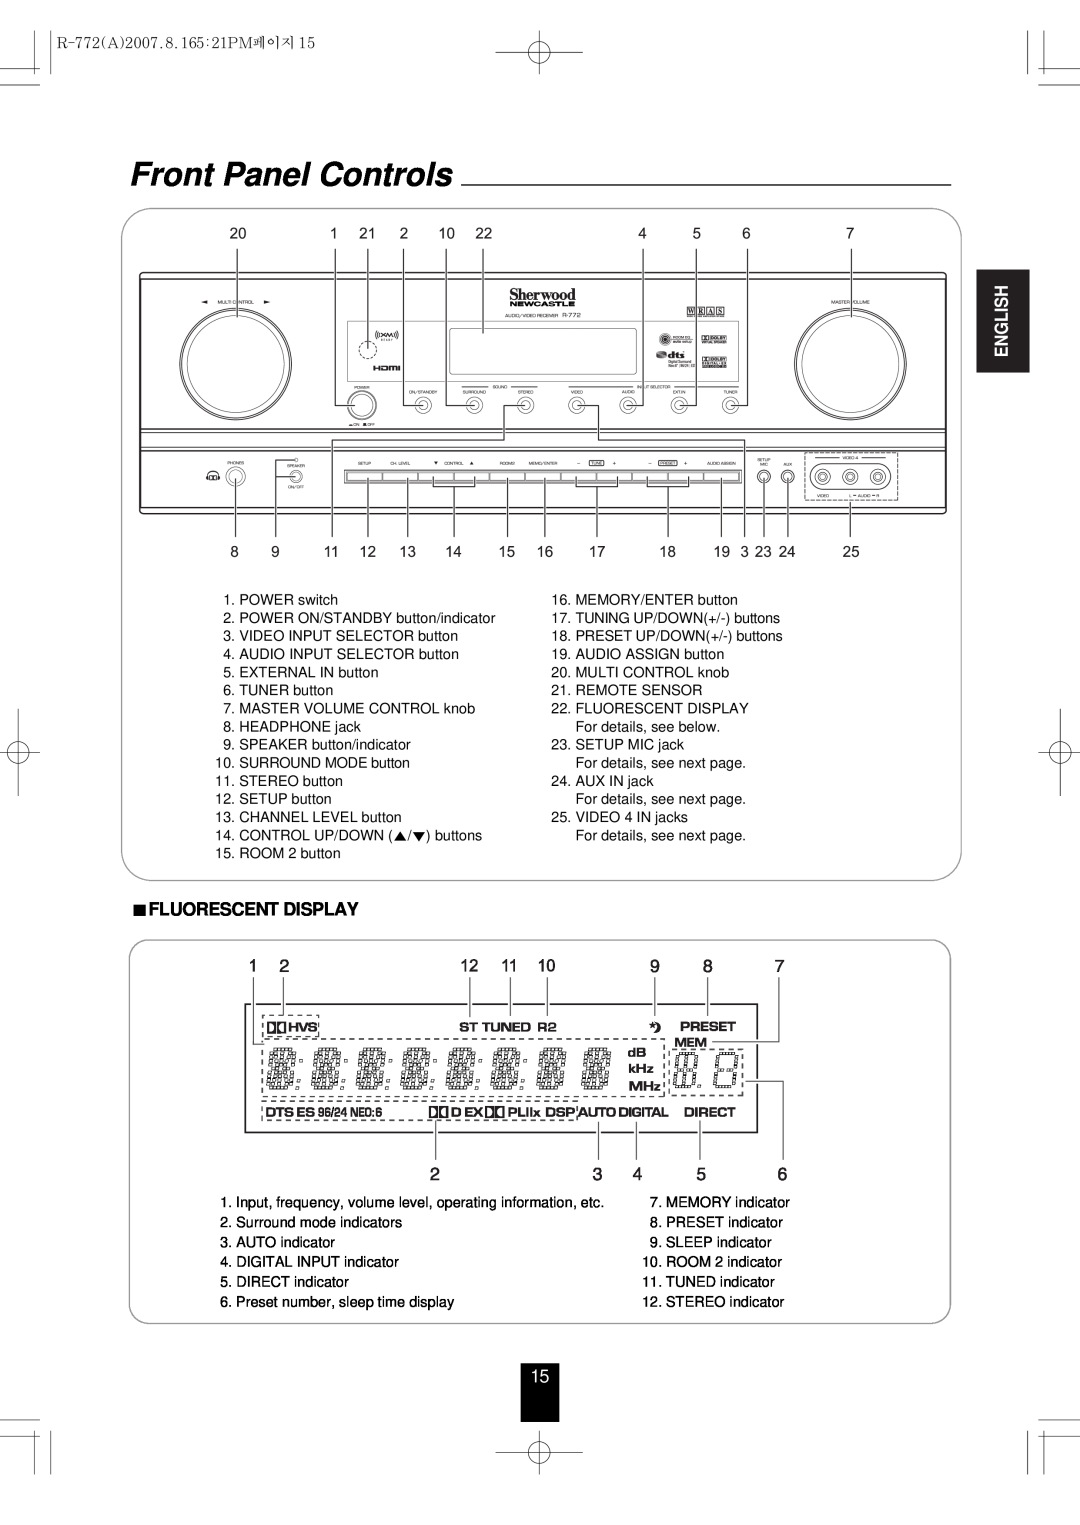 Sherwood R-772 manual Front Panel Controls, Fluorescent Display, English 